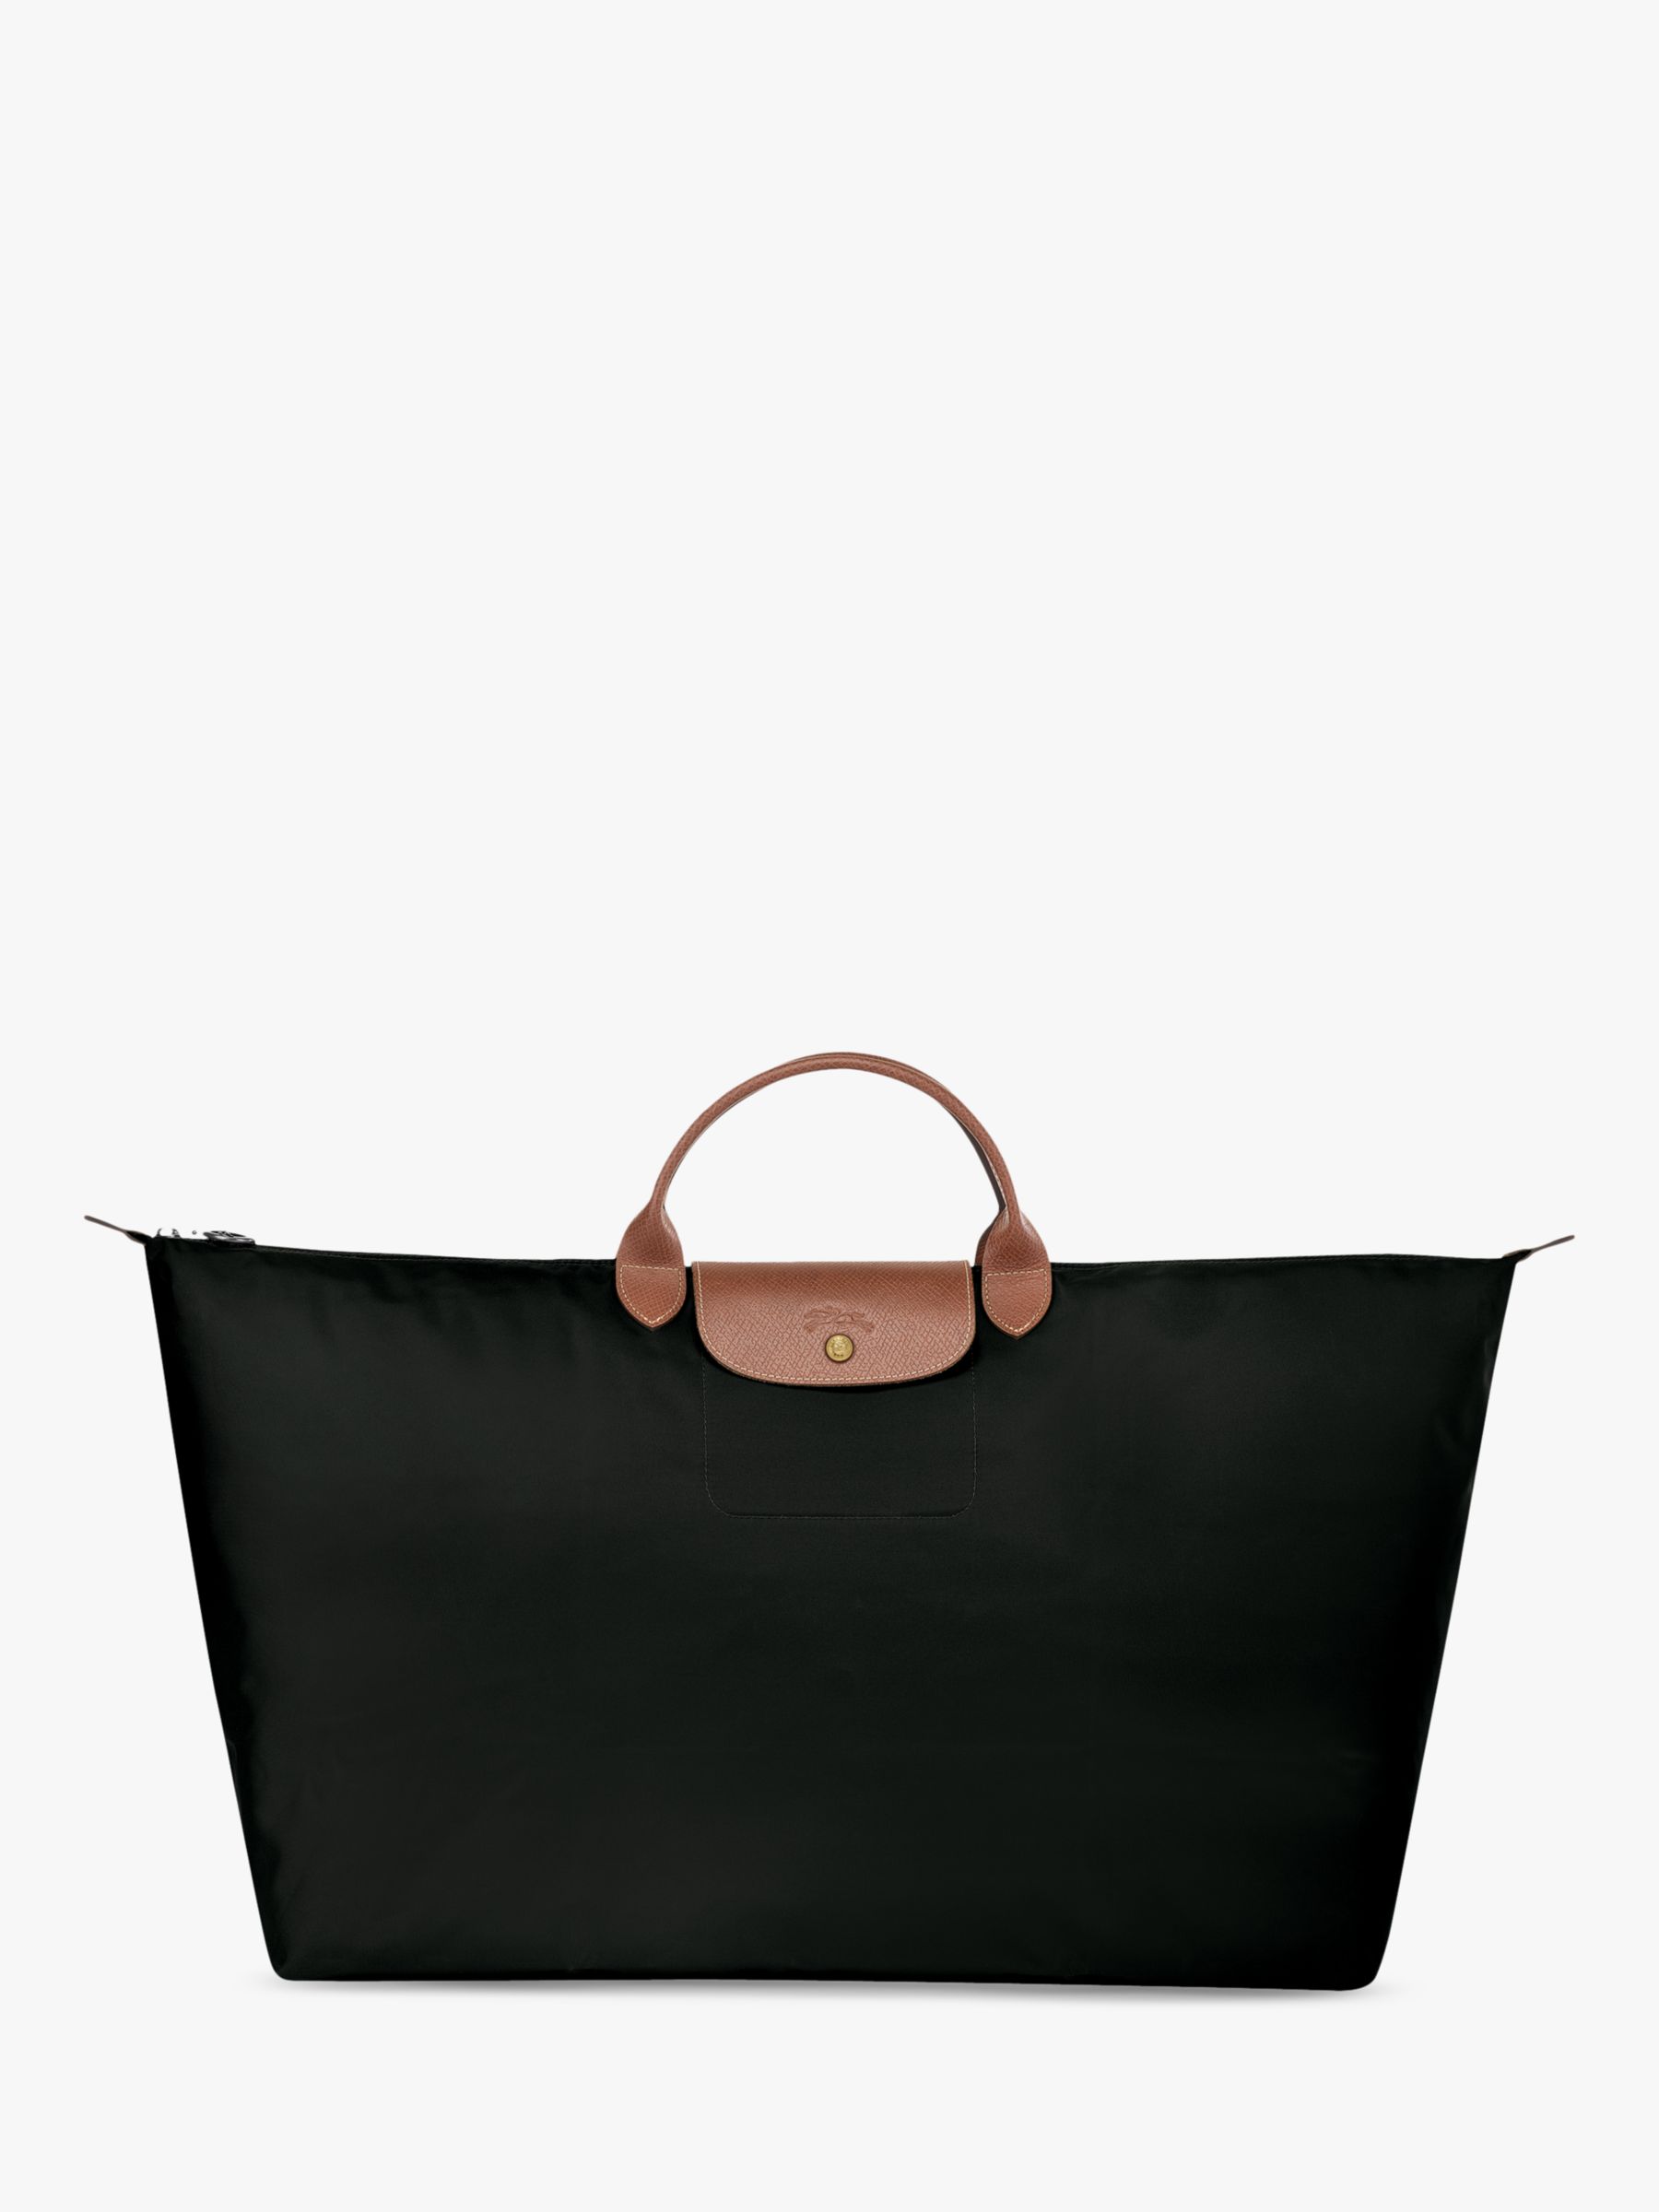 Longchamp Le Pliage Original Medium Travel Bag, Black